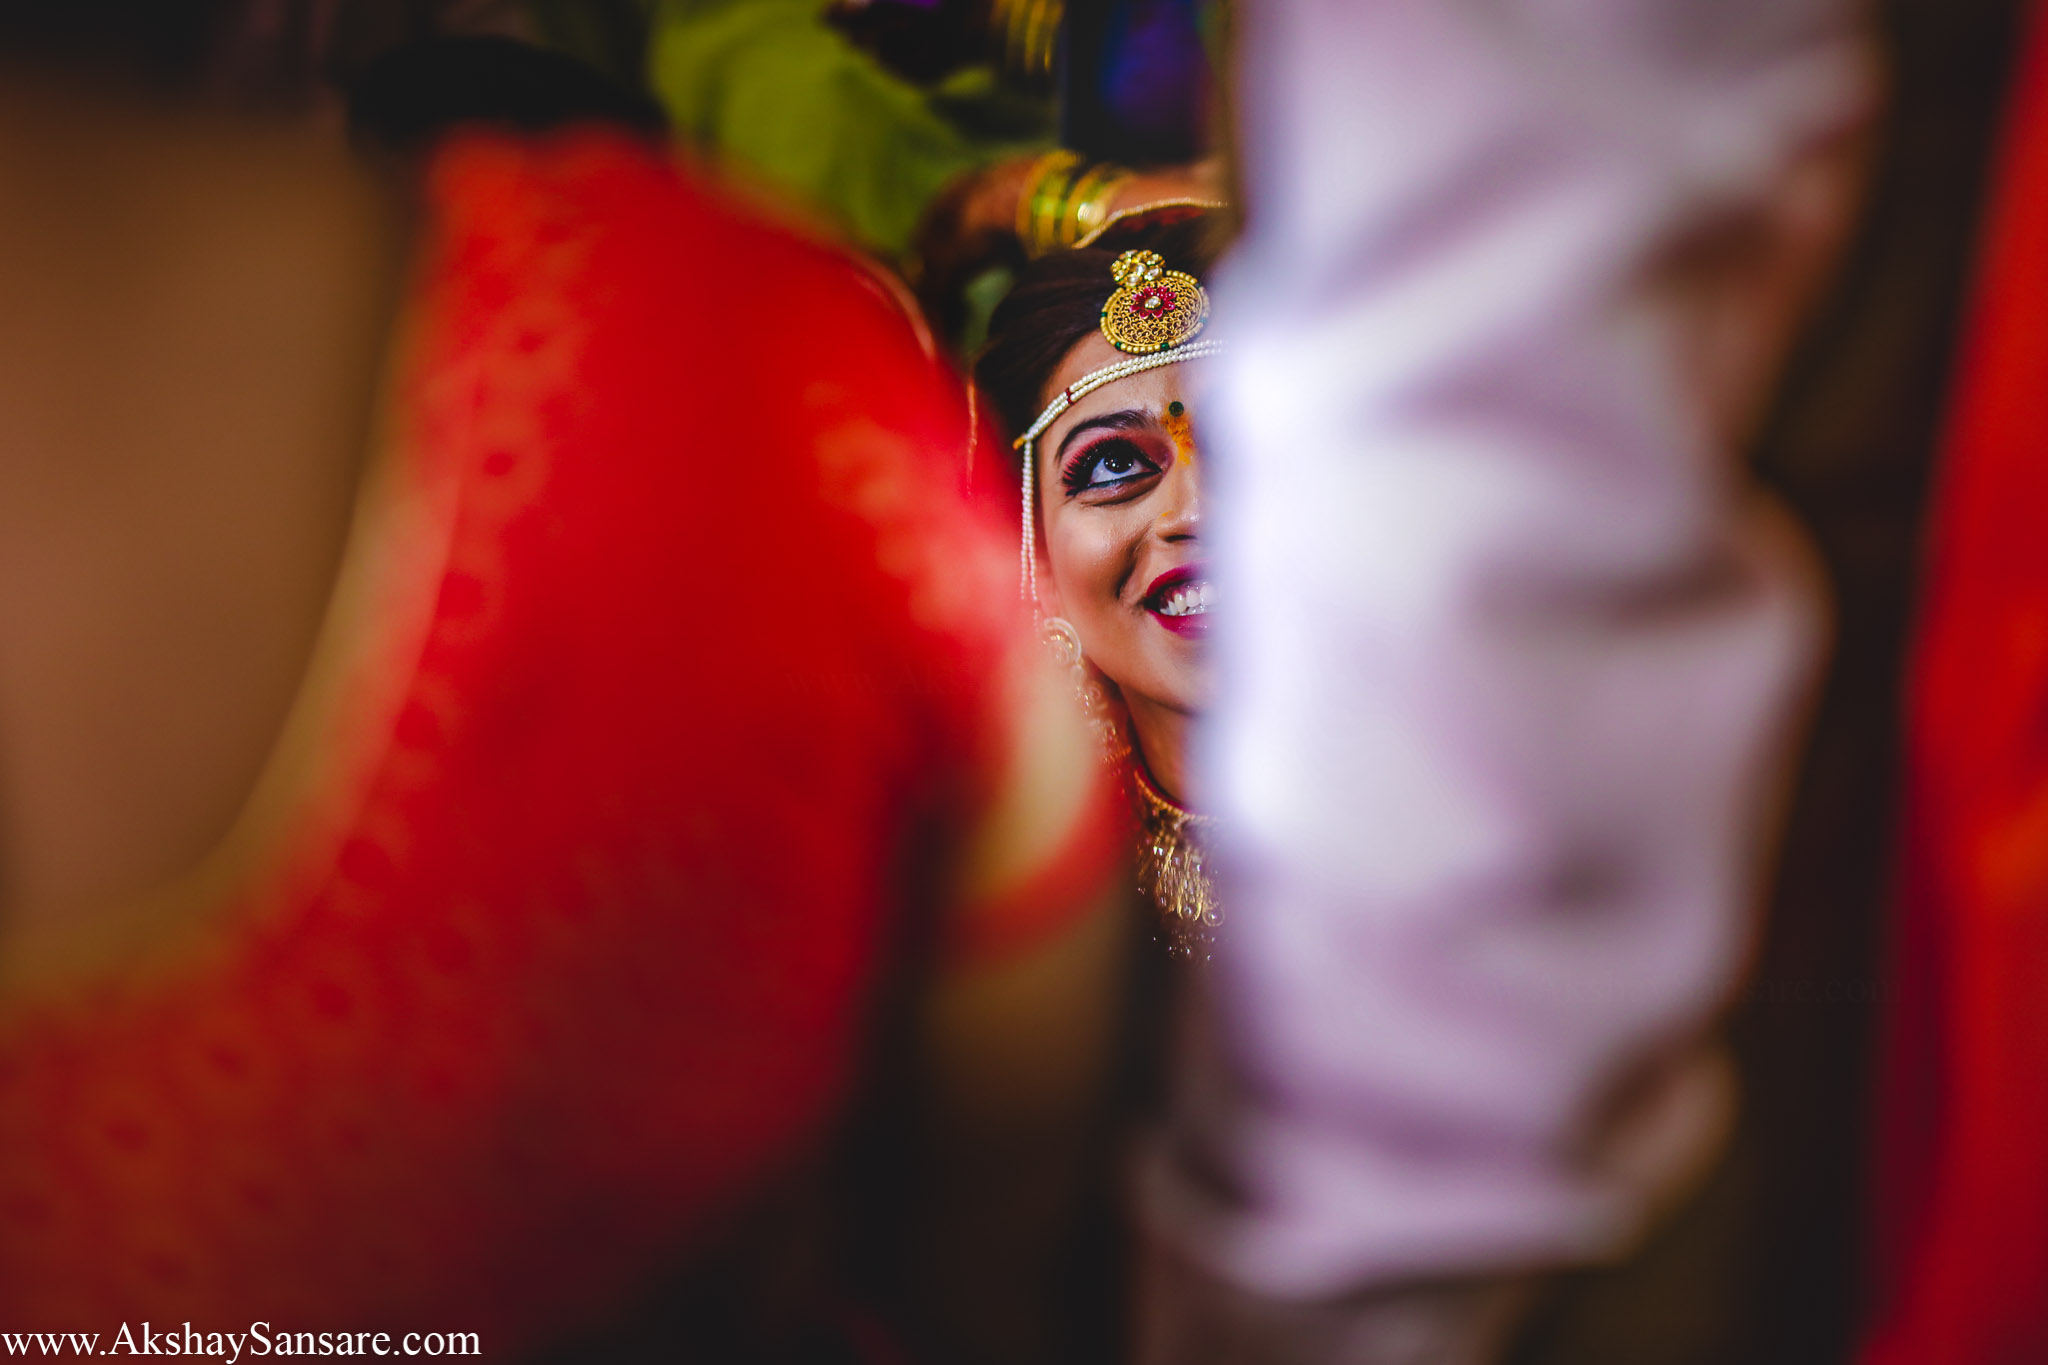 Ajay & Devika Akshay Sansare Photography Best Candid wedding photographer in mumbai india9.jpg